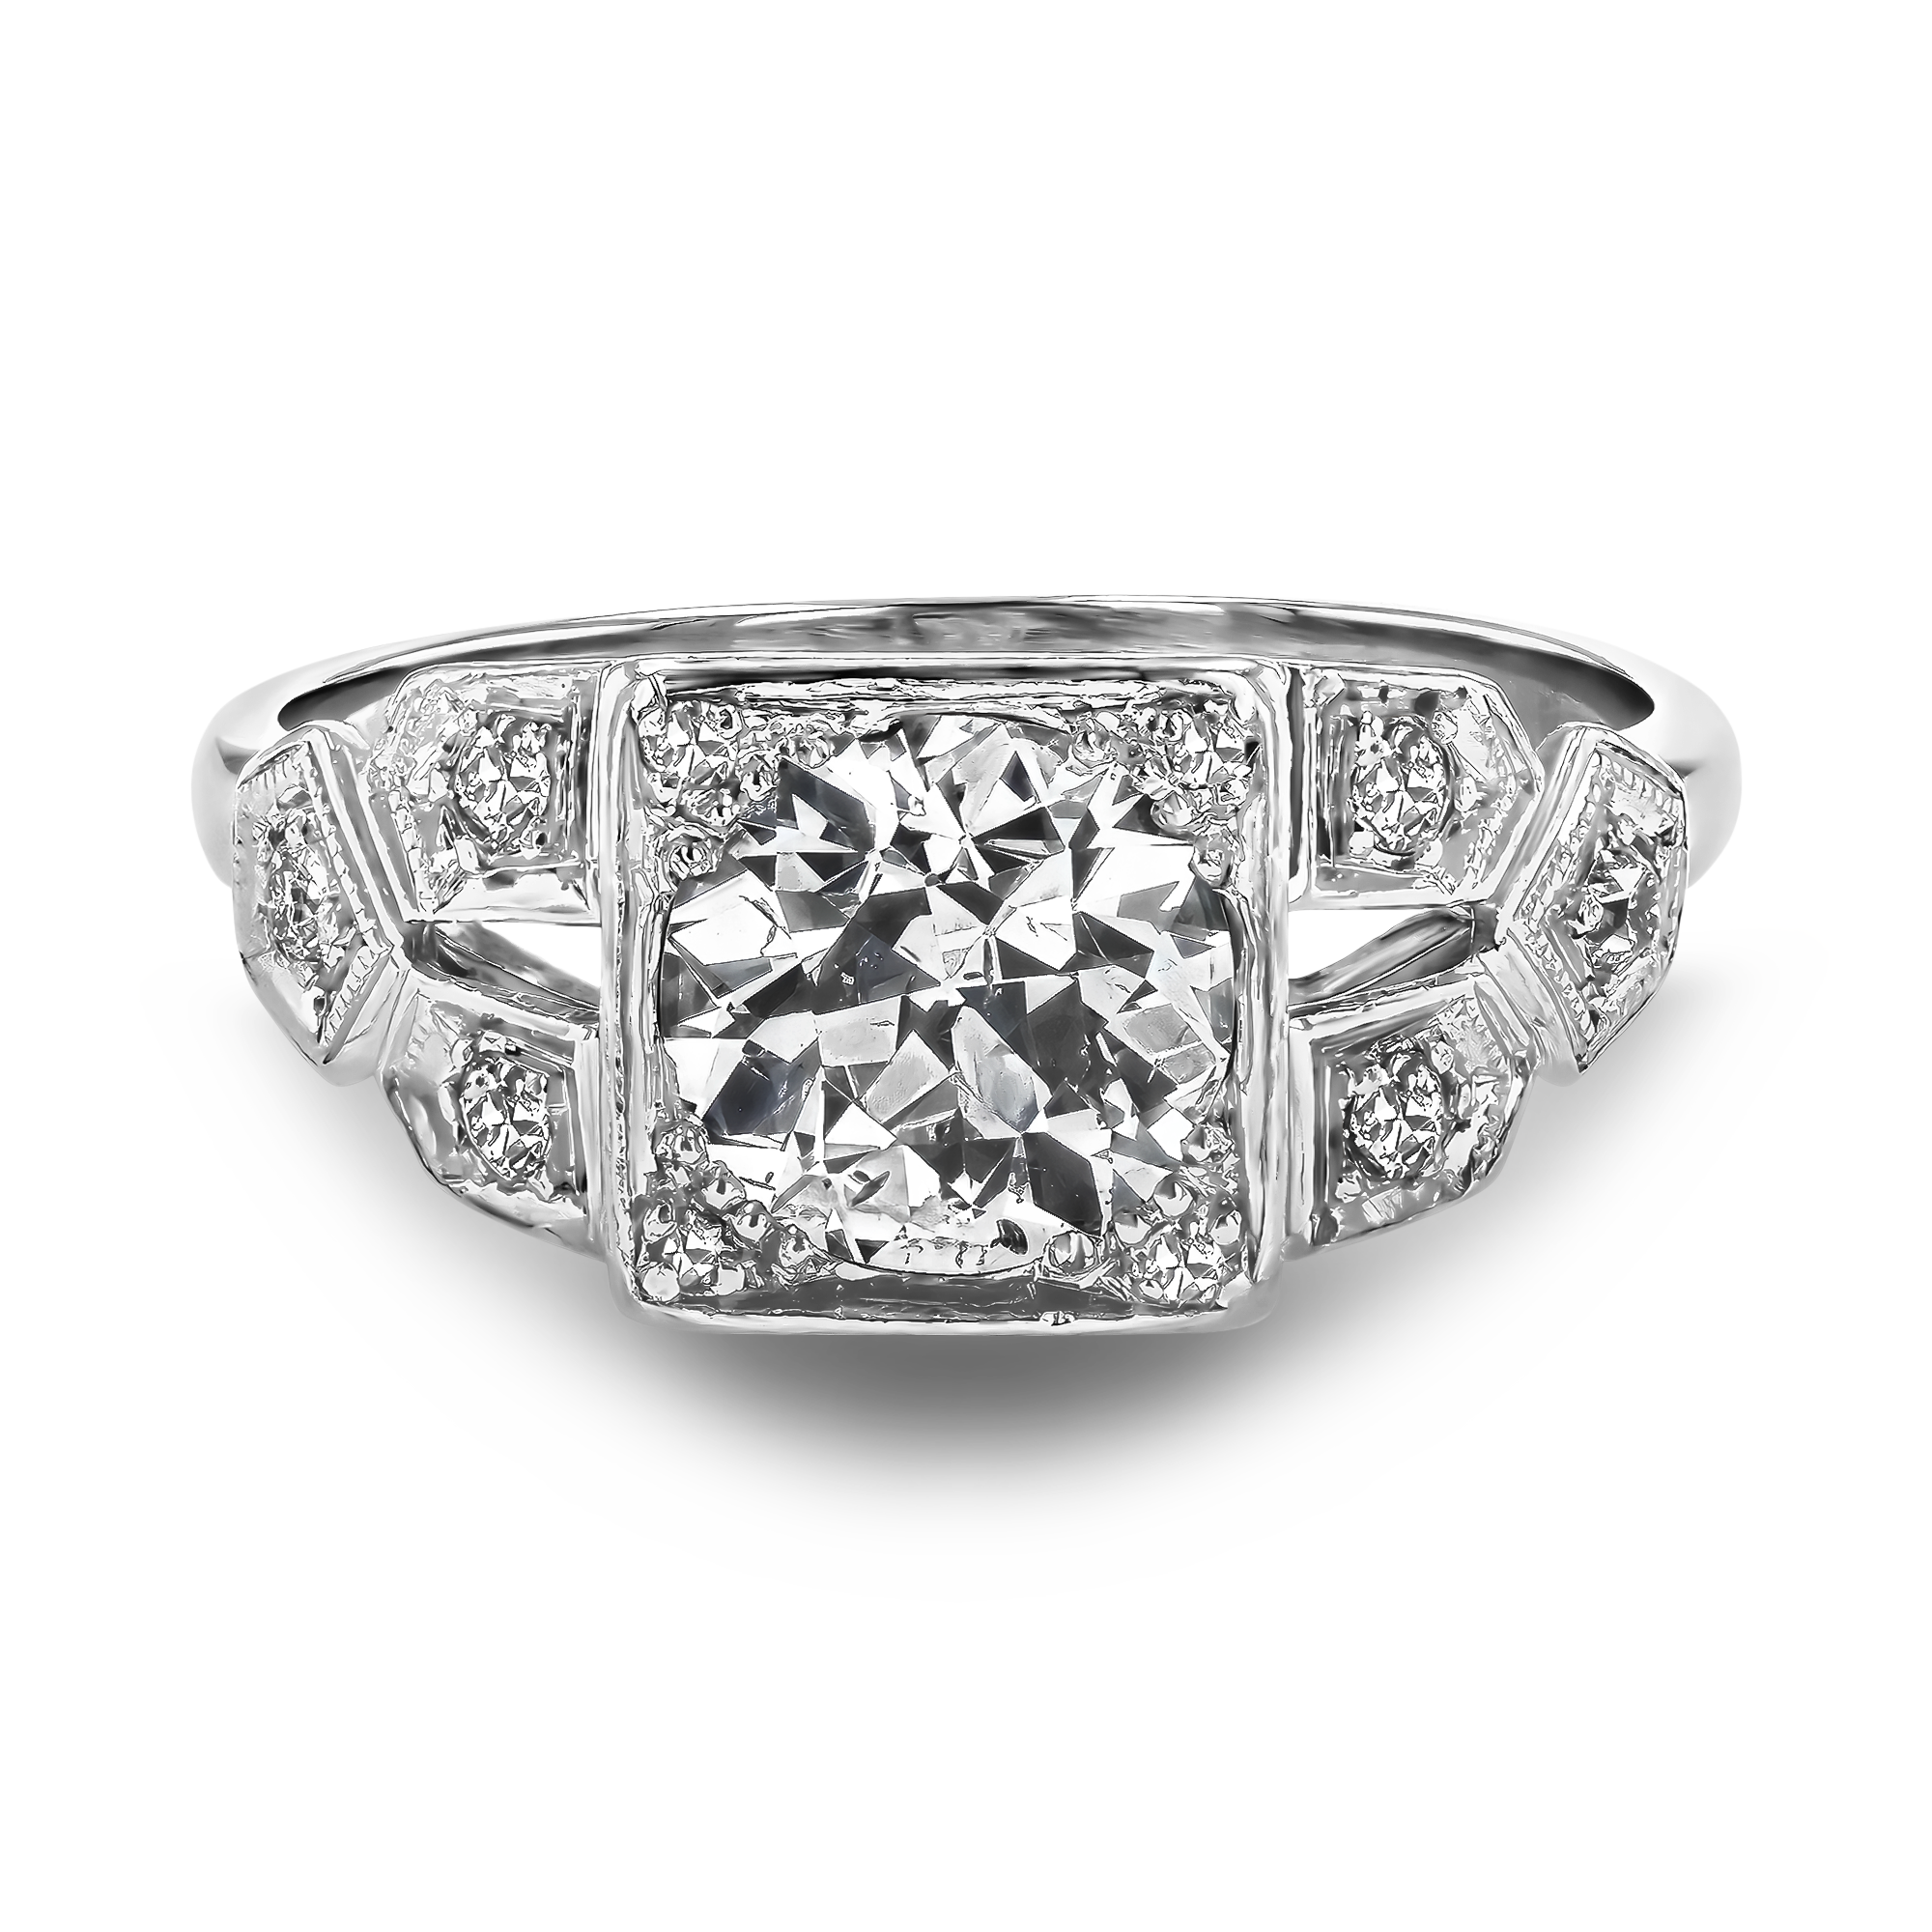 Art Deco Inspired 1.25ct Diamond Cluster Ring Brilliant Cut, Millegrain Set_2